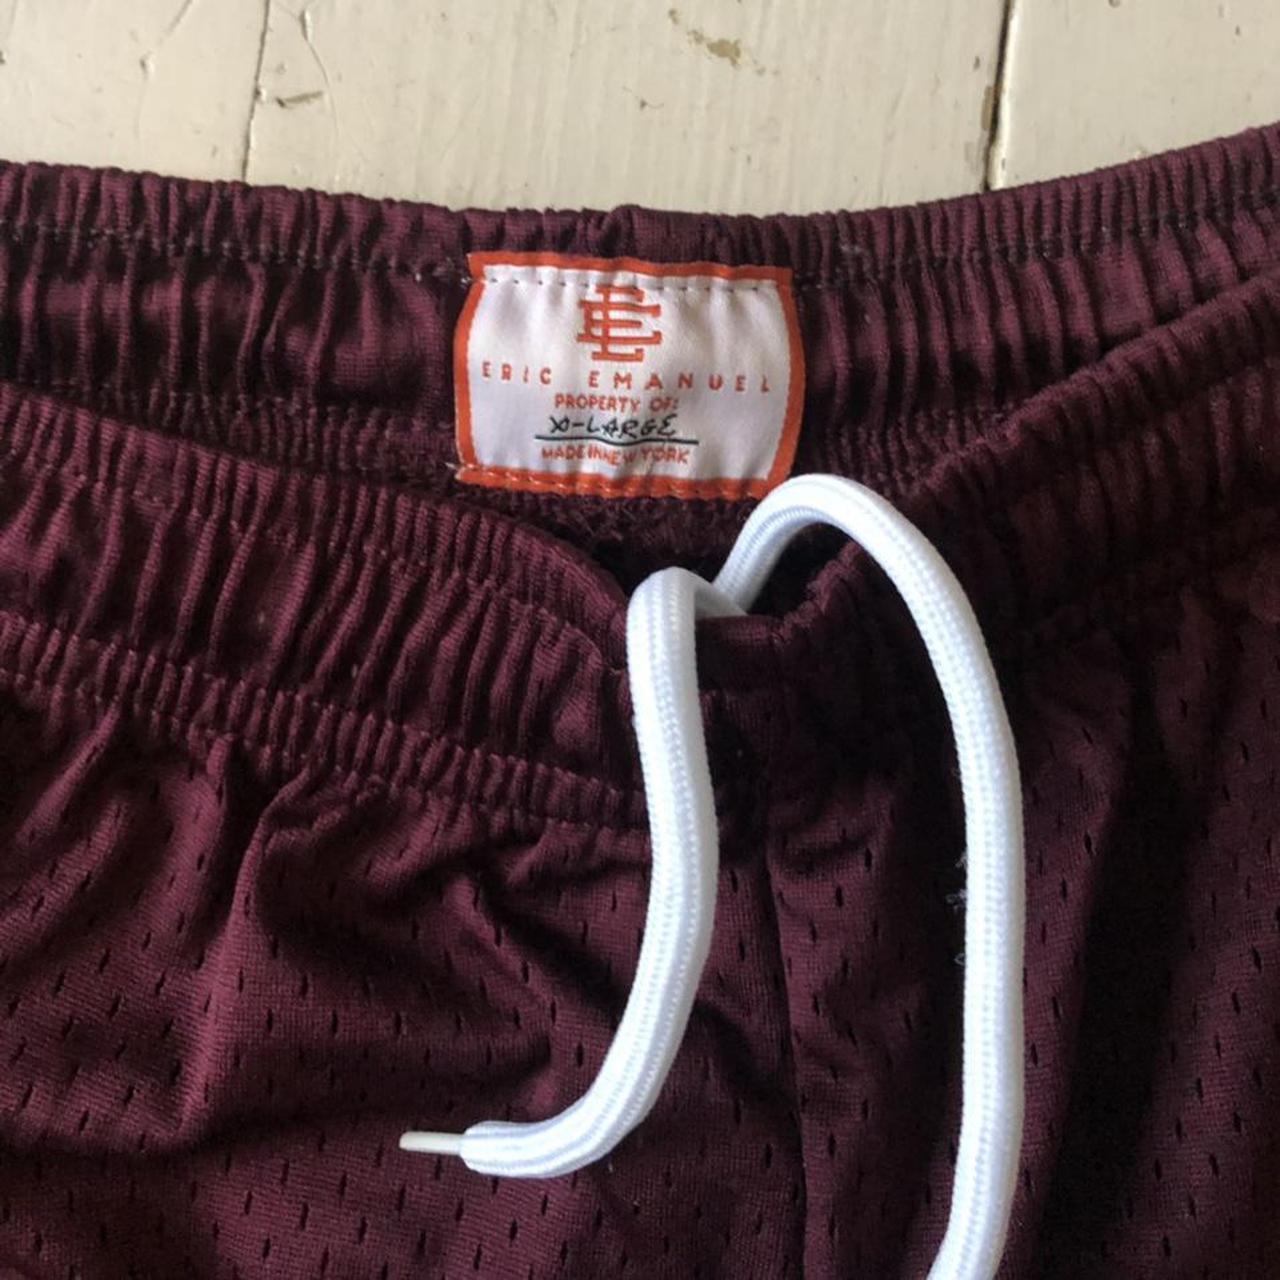 Product Image 2 - Eric Emanuel shorts. Size small.